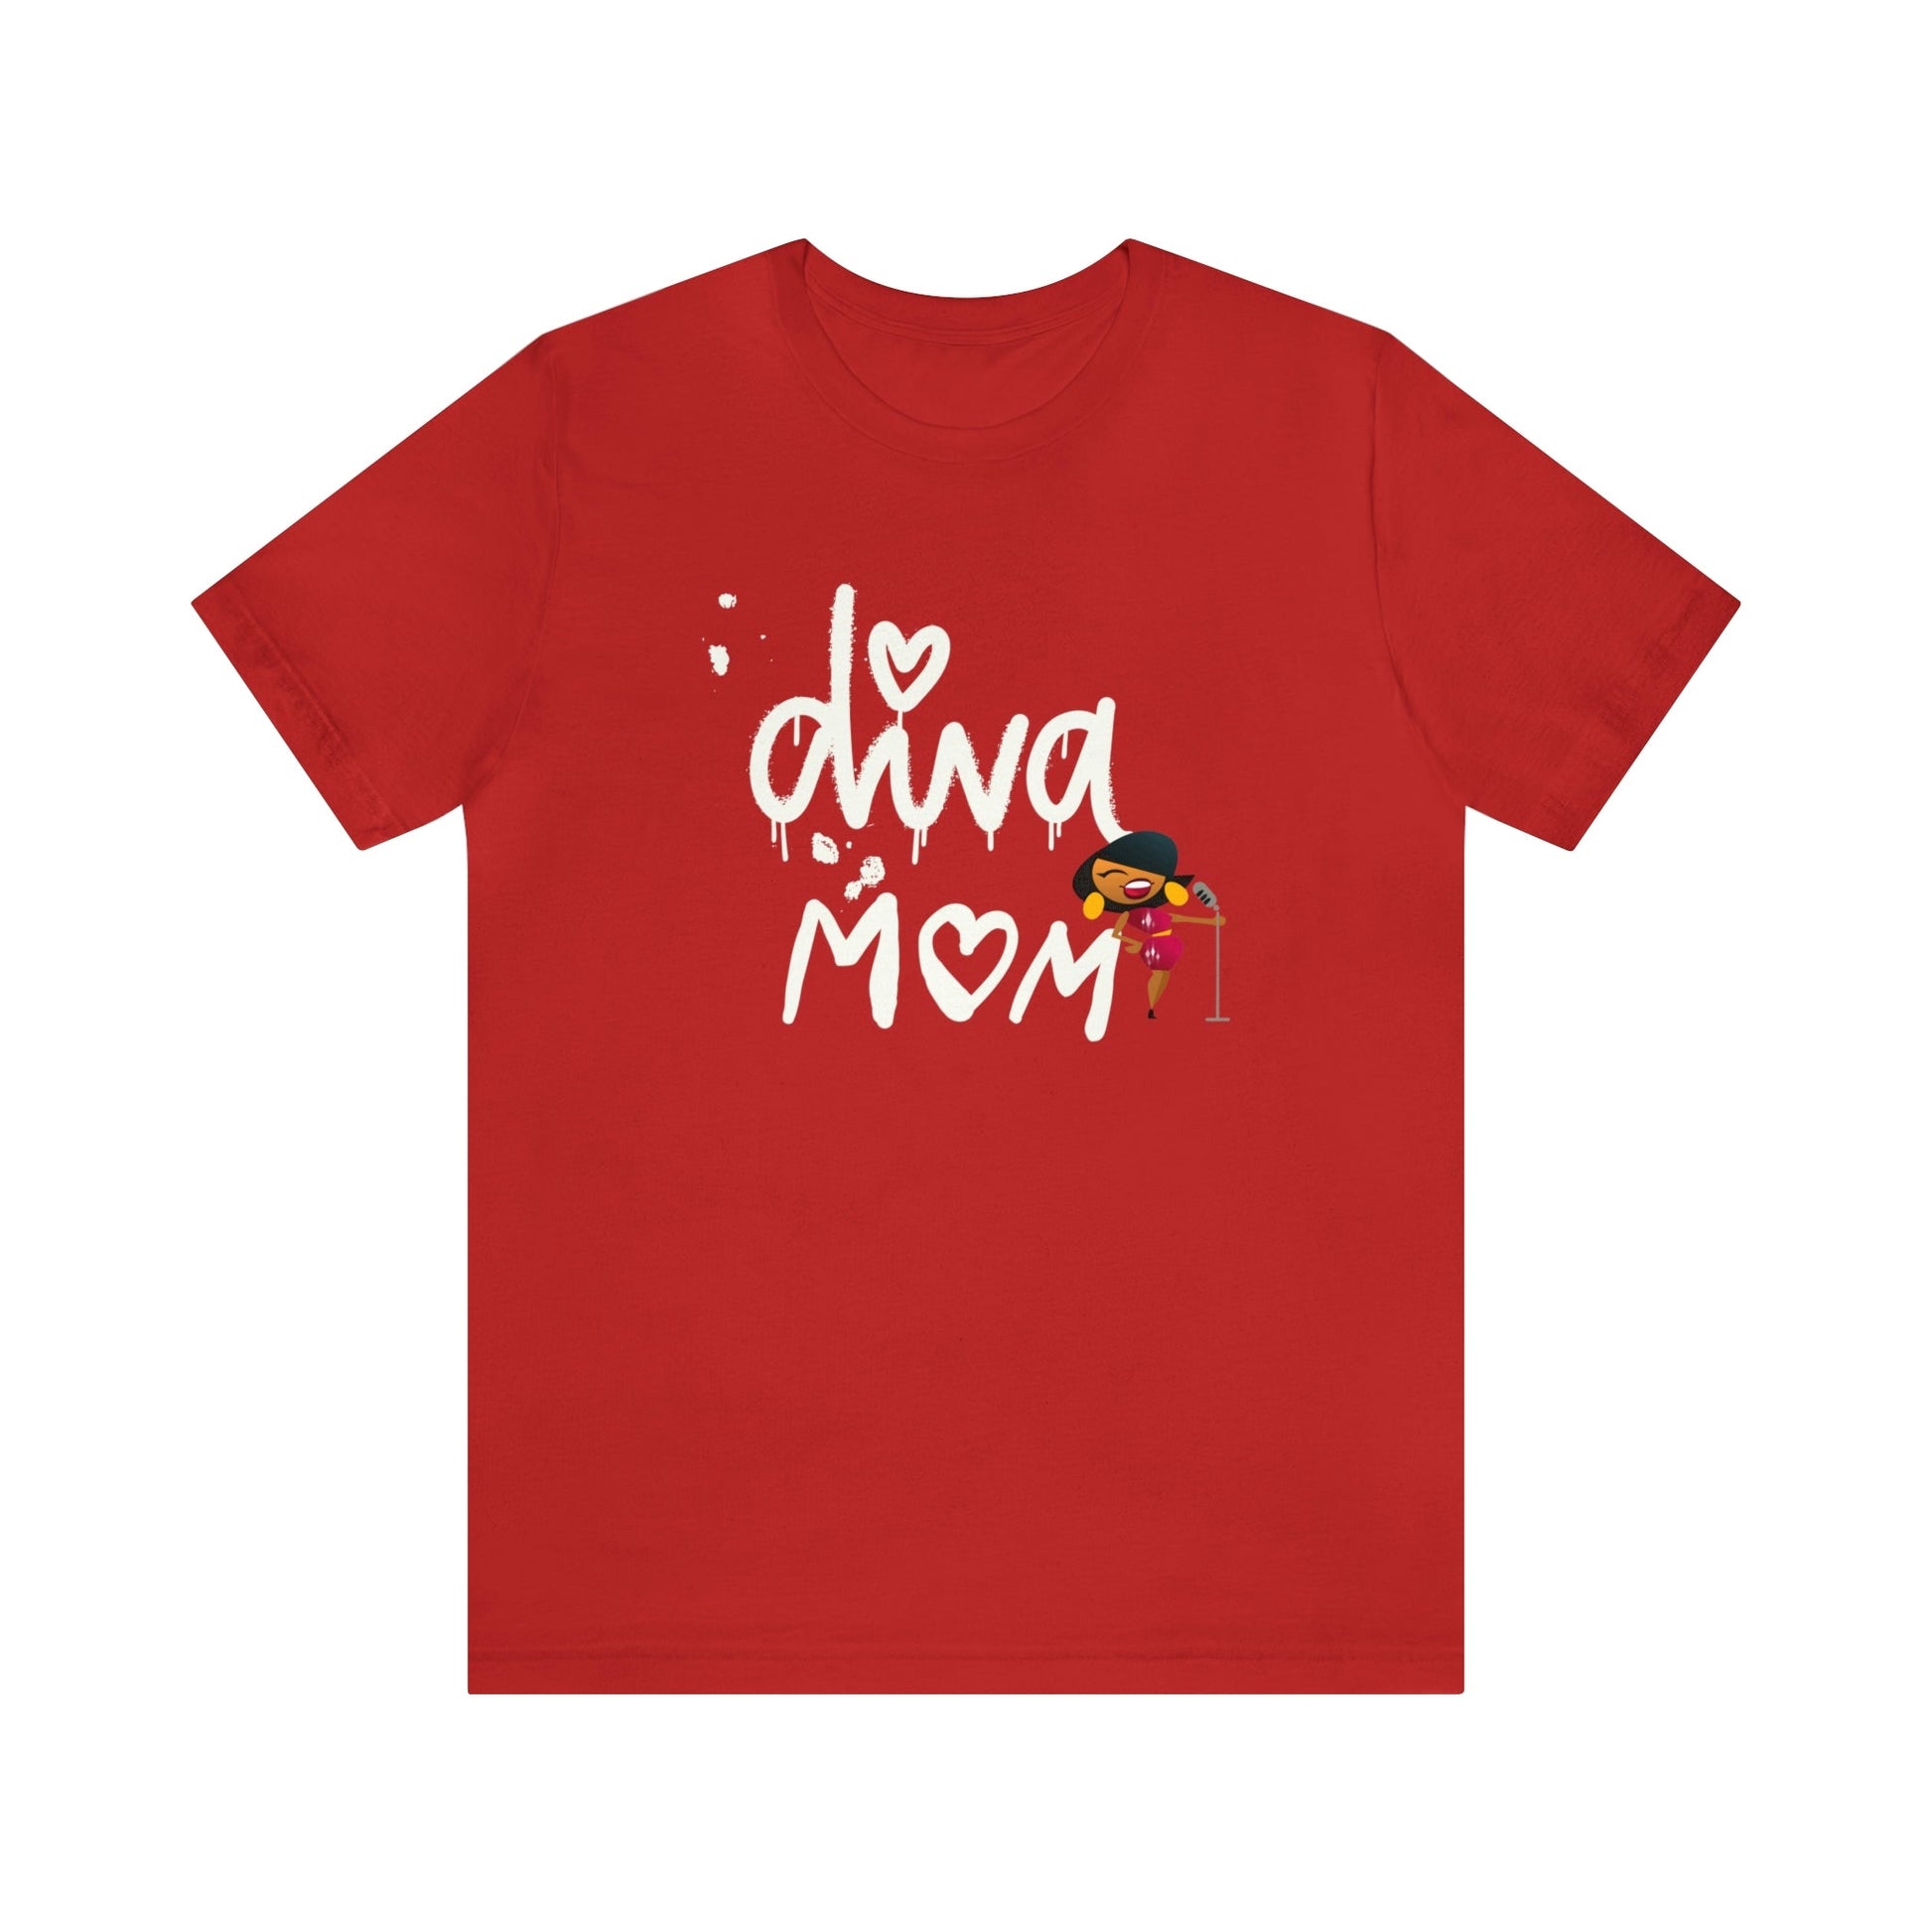 Diva MOM Sings T-shirt-T-Shirt-Red-S-mysticalcherry